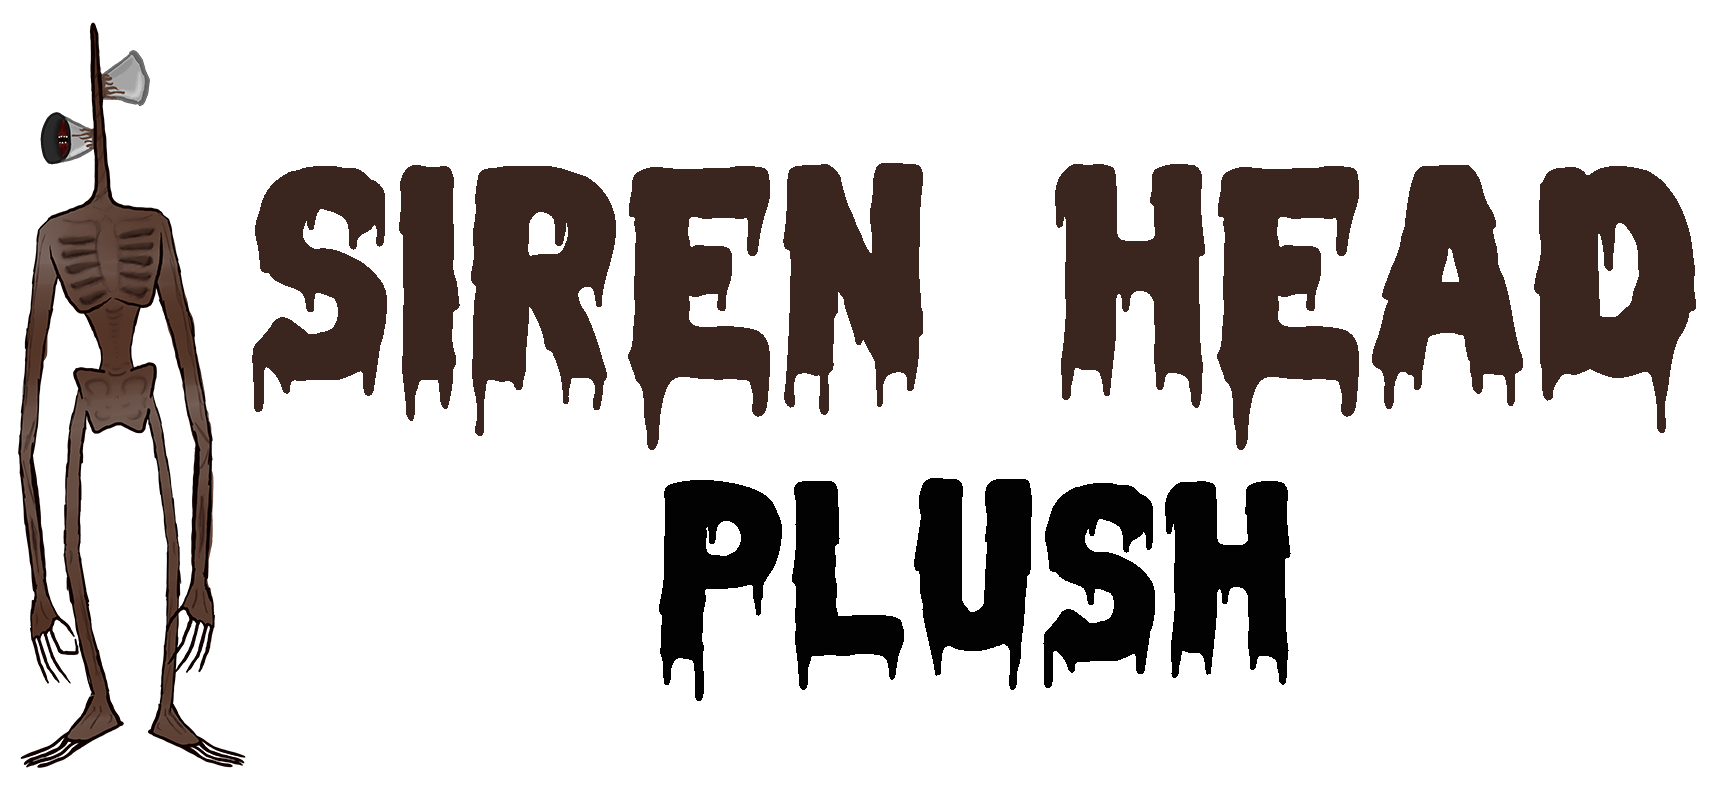 Siren-Head-plush-logo